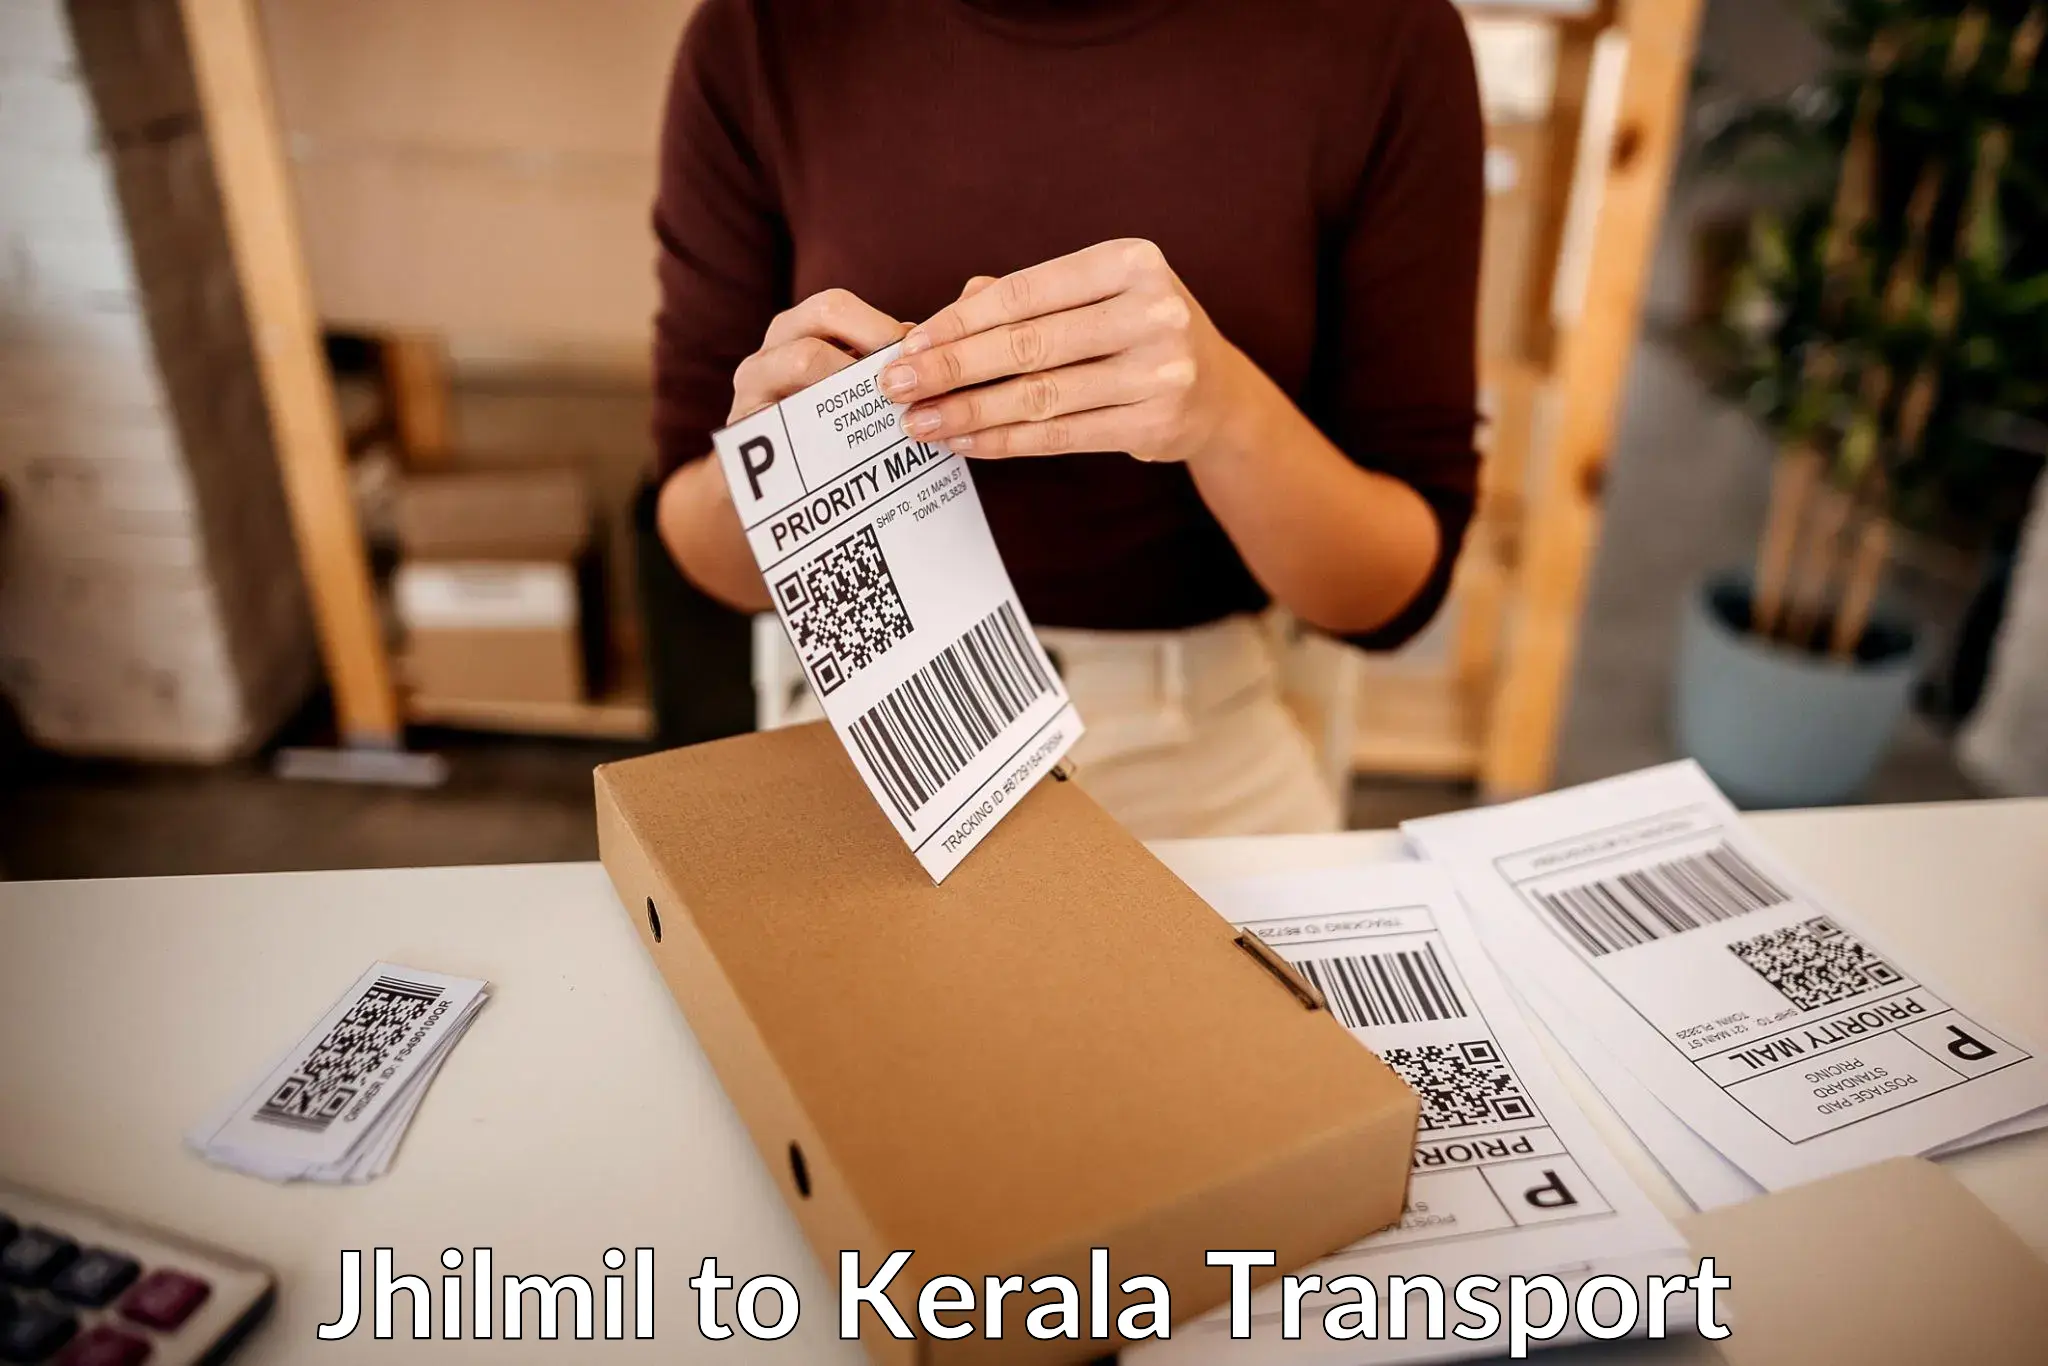 Goods delivery service Jhilmil to Thiruvananthapuram